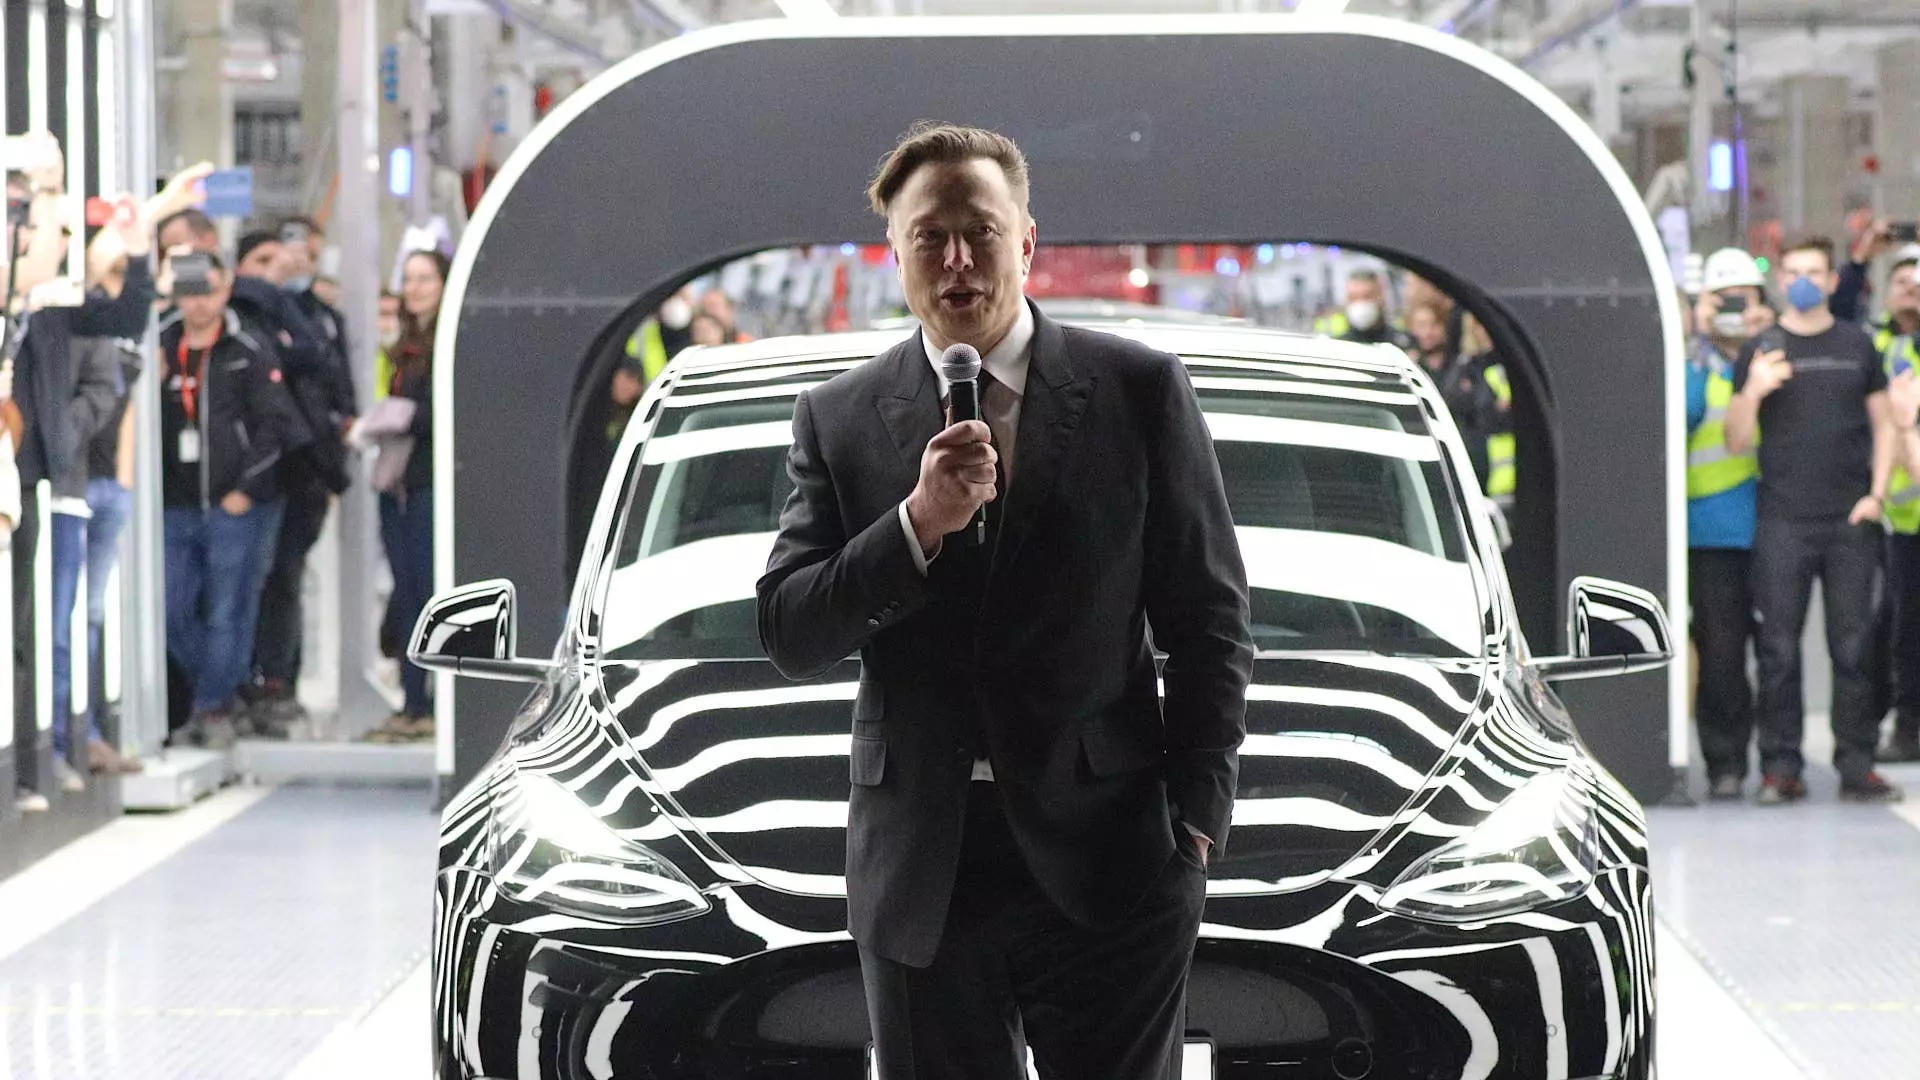 Tesla jobs in focus ahead of Elon Musk’s India visit